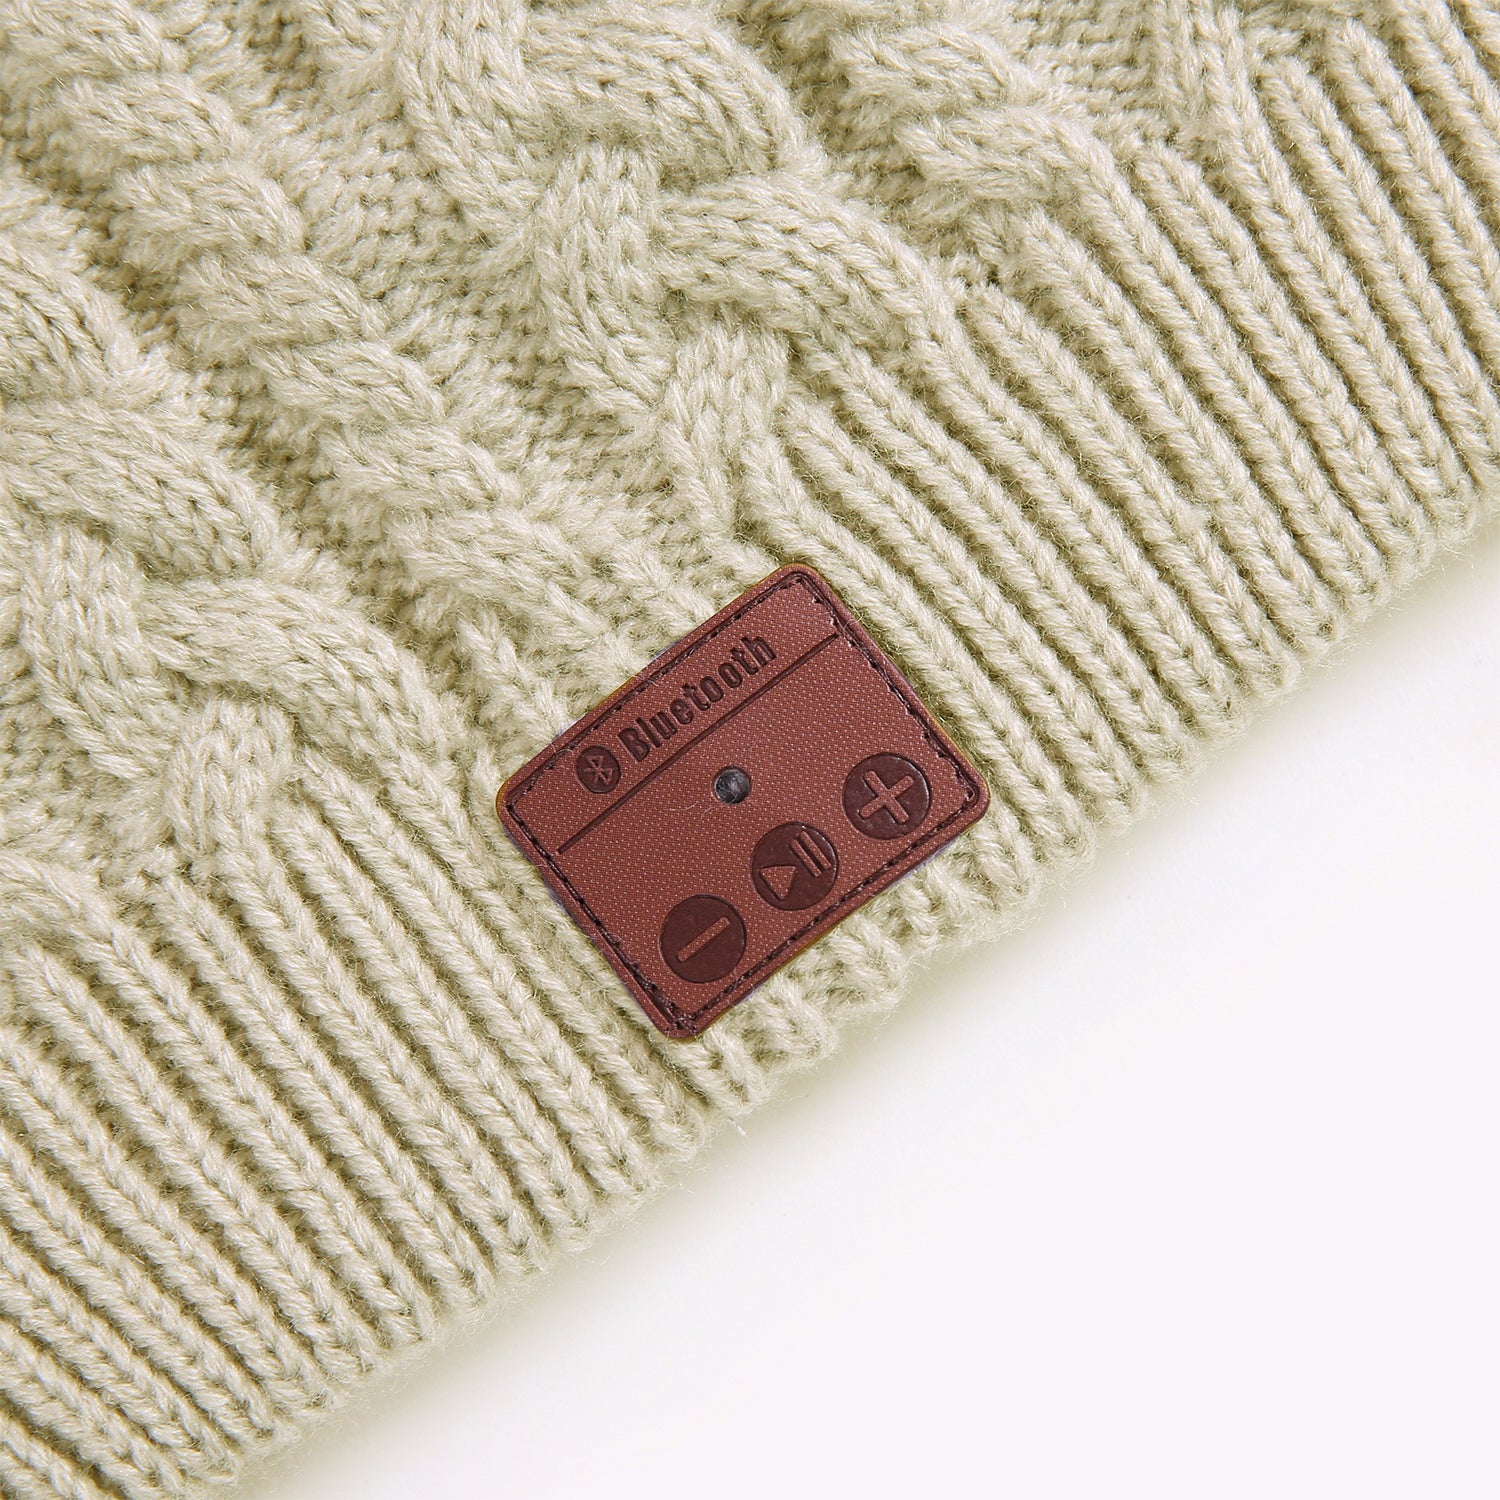 Wireless Bluetooth Knit Hat for winter (Unisex)